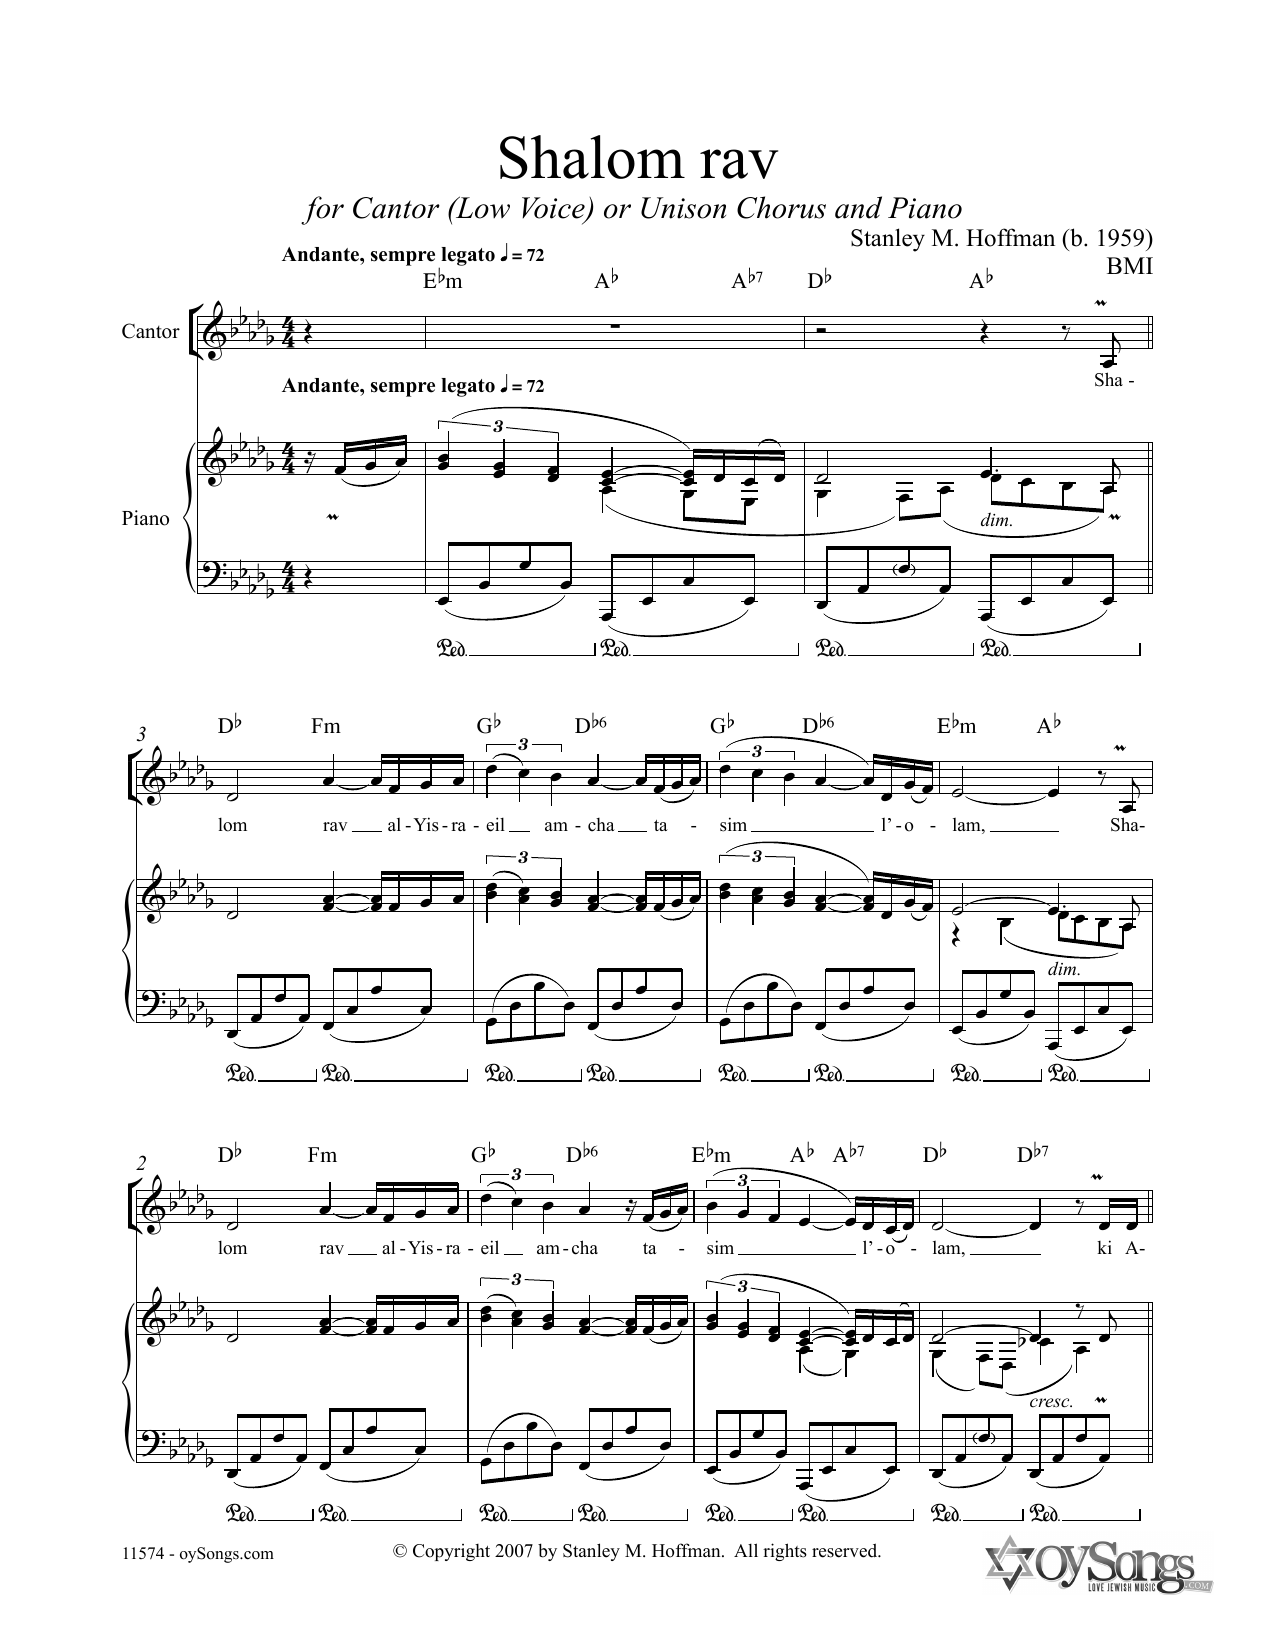 Stanley F. Hoffman Shalom Rav Sheet Music Notes & Chords for SATB Choir - Download or Print PDF